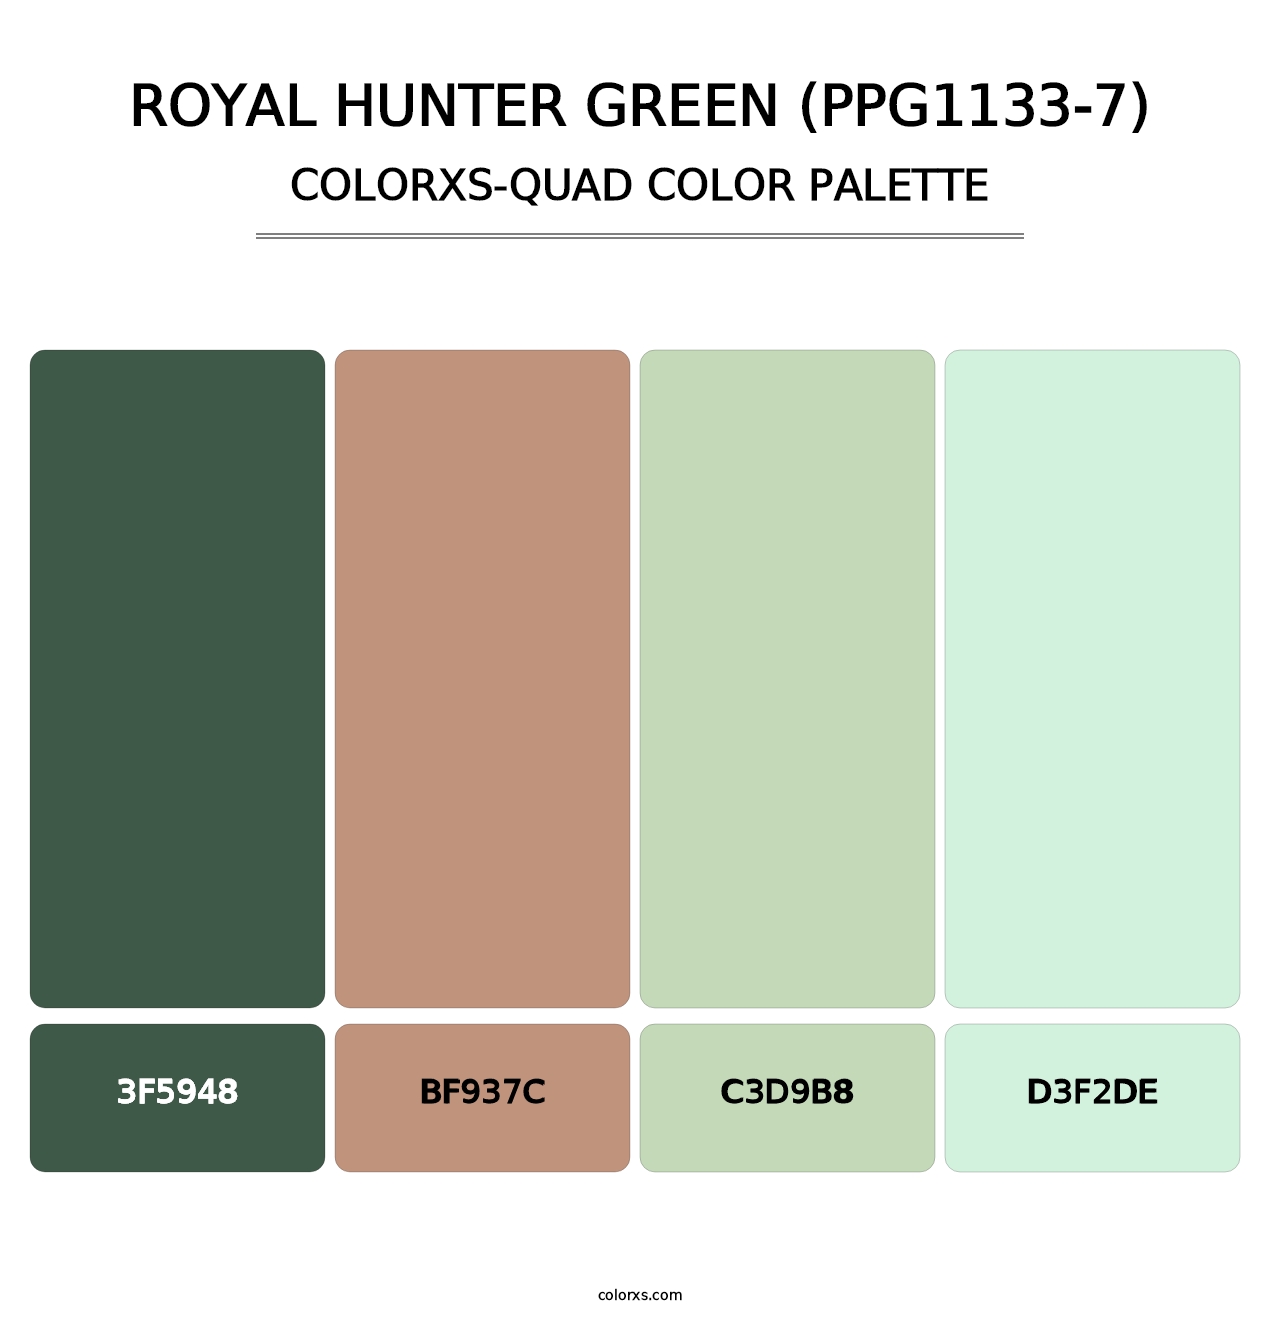 Royal Hunter Green (PPG1133-7) - Colorxs Quad Palette